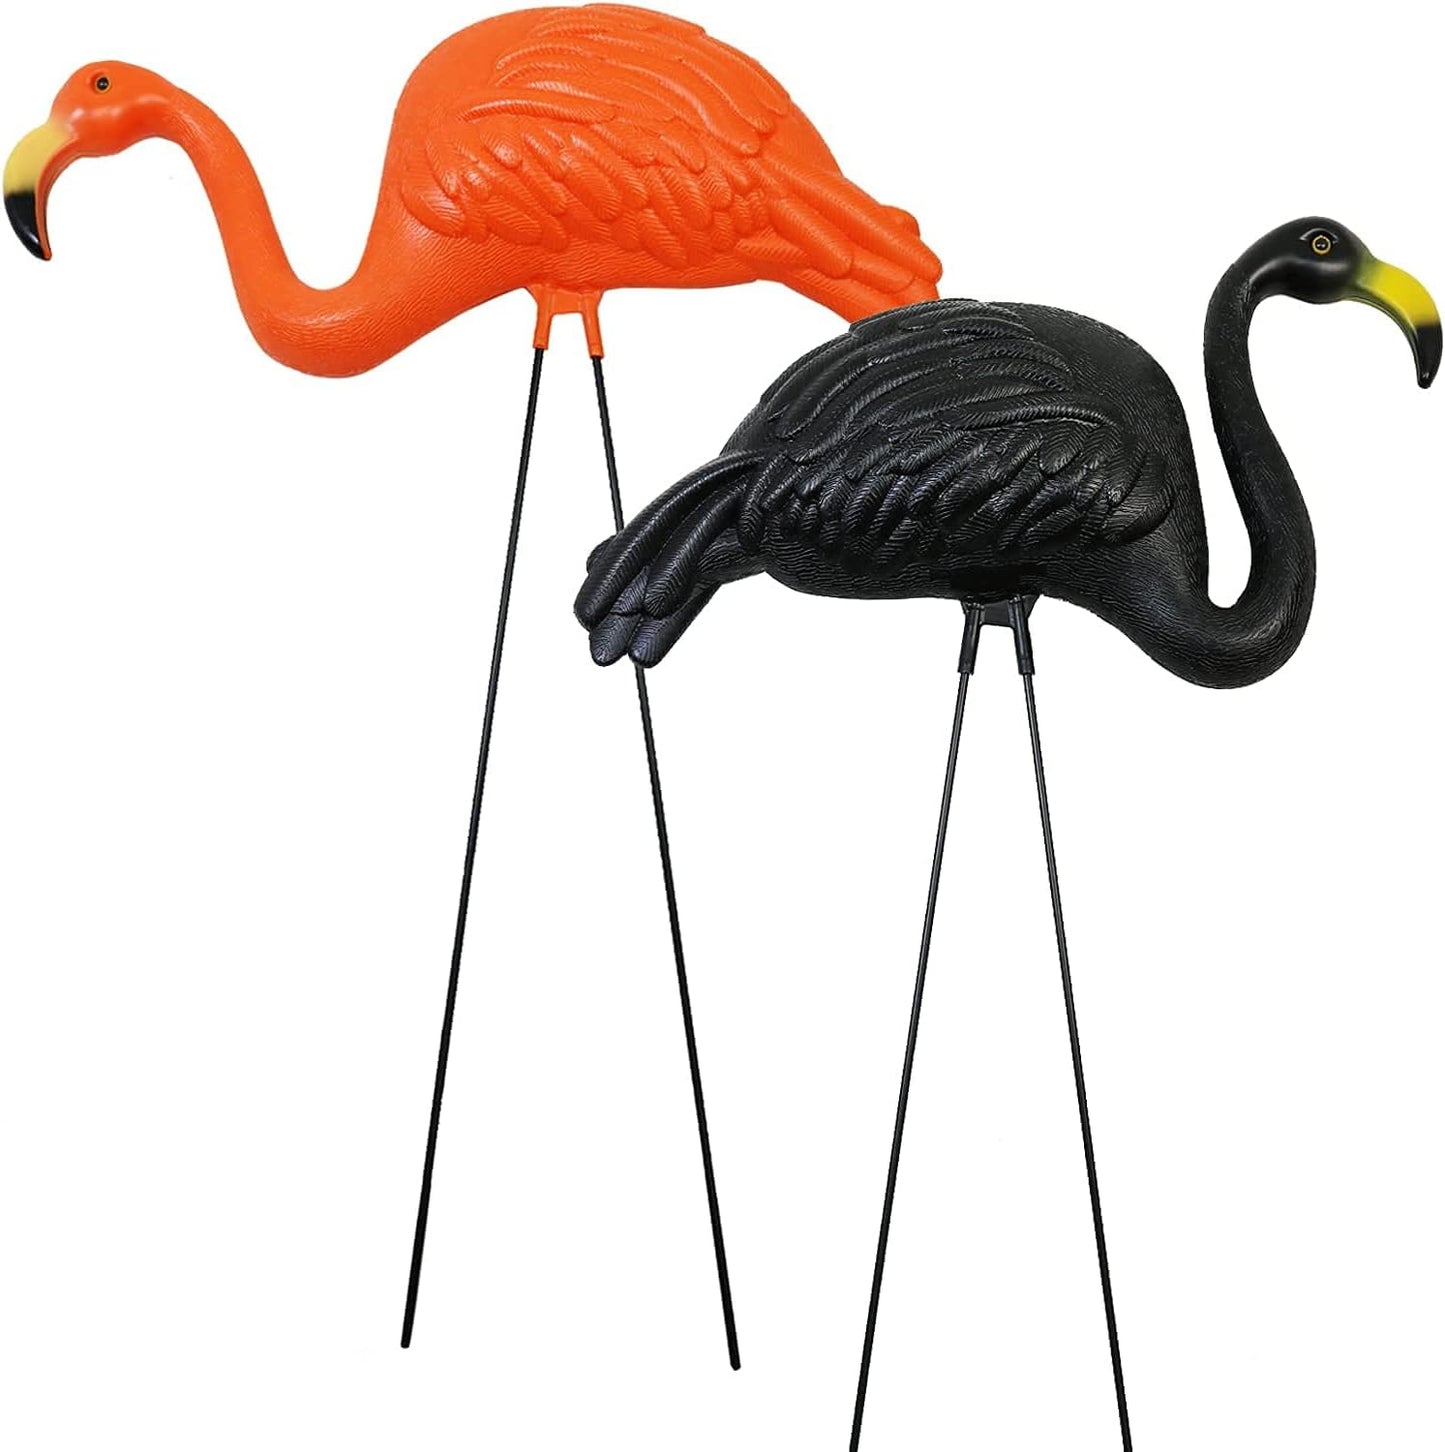 GIFTEXPRESS Black and Orange Flamingos for Halloween Lawn Ornaments, Halloween Décor, Flamingo Yard Ornament ((2pc Black & Orange))